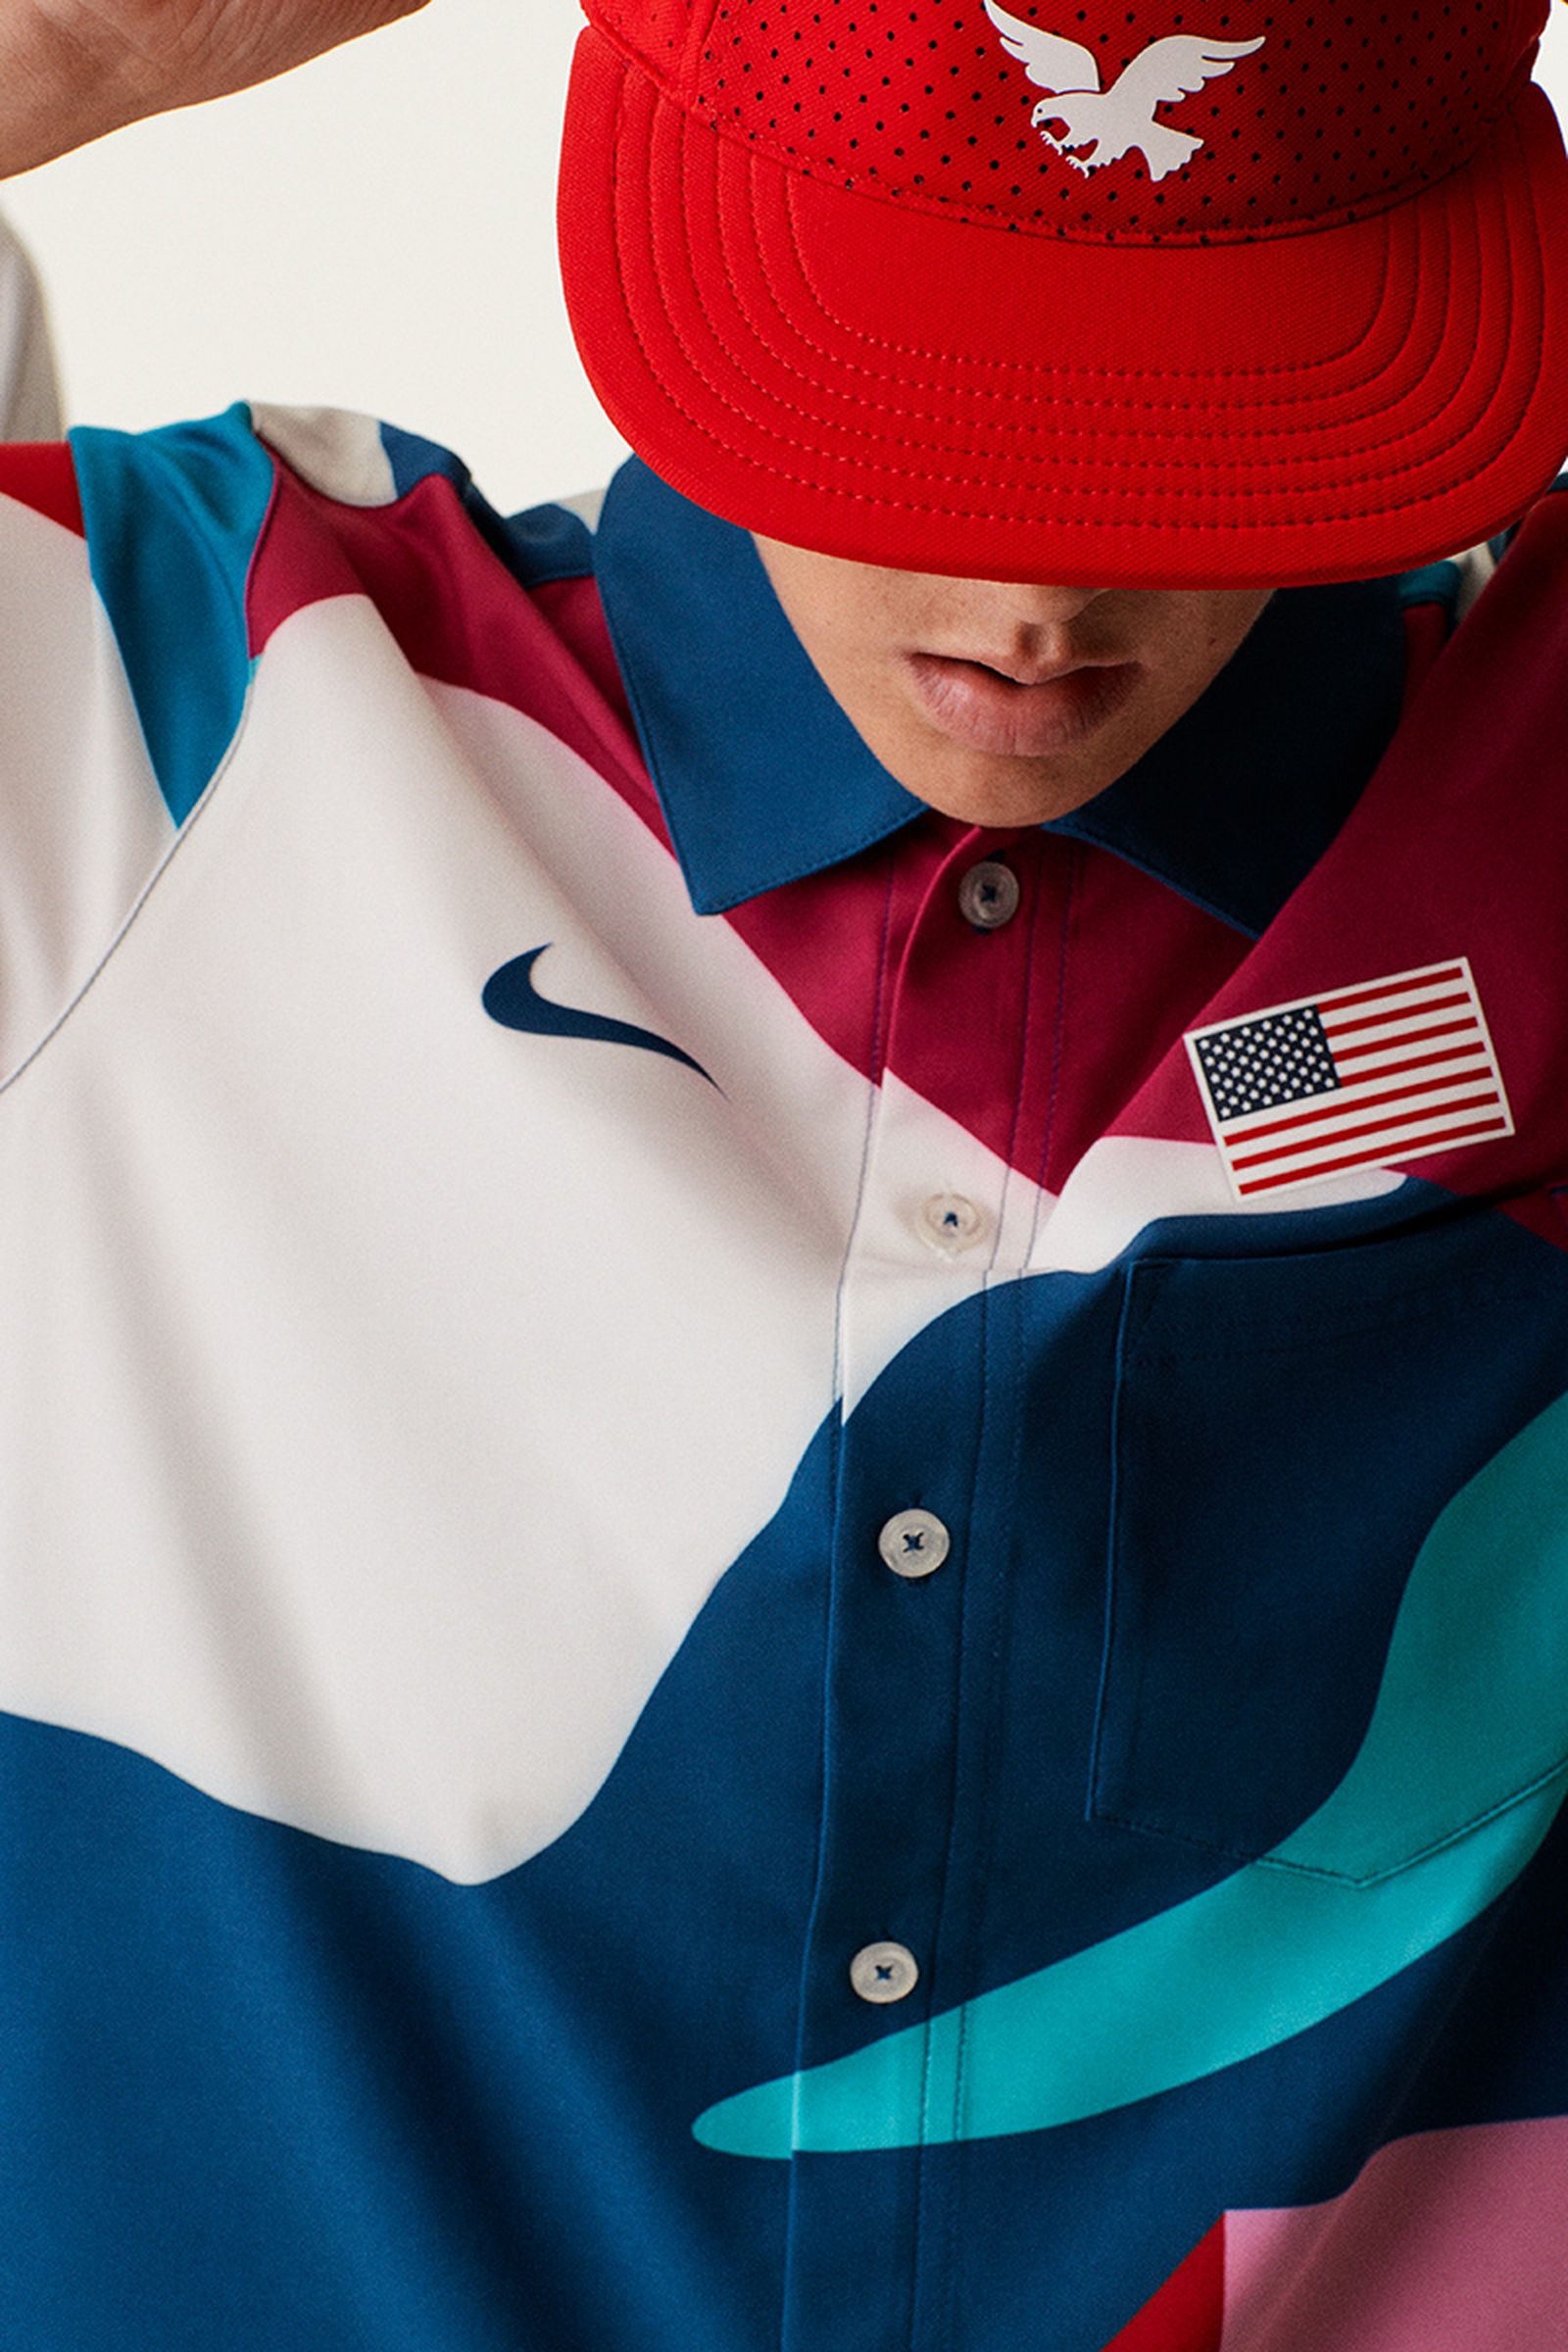 Piet Parra Designed the Nike 2020 Olympic Skate Uniforms